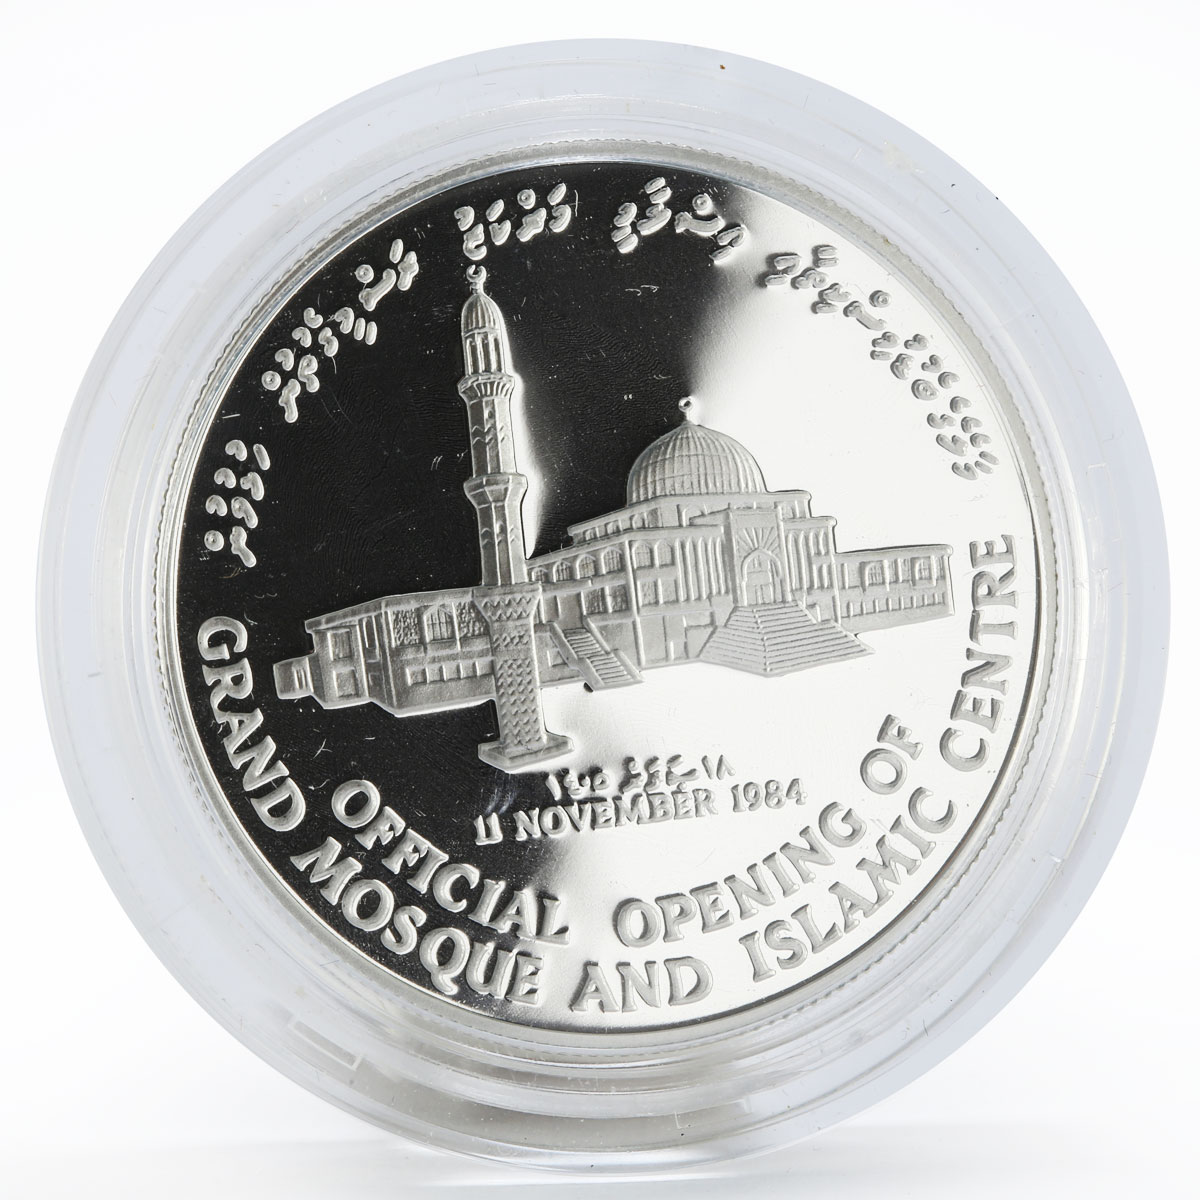 Maldives 100 rufiyaa Grand Mosque and Islamic Centre proof silver coin 1984